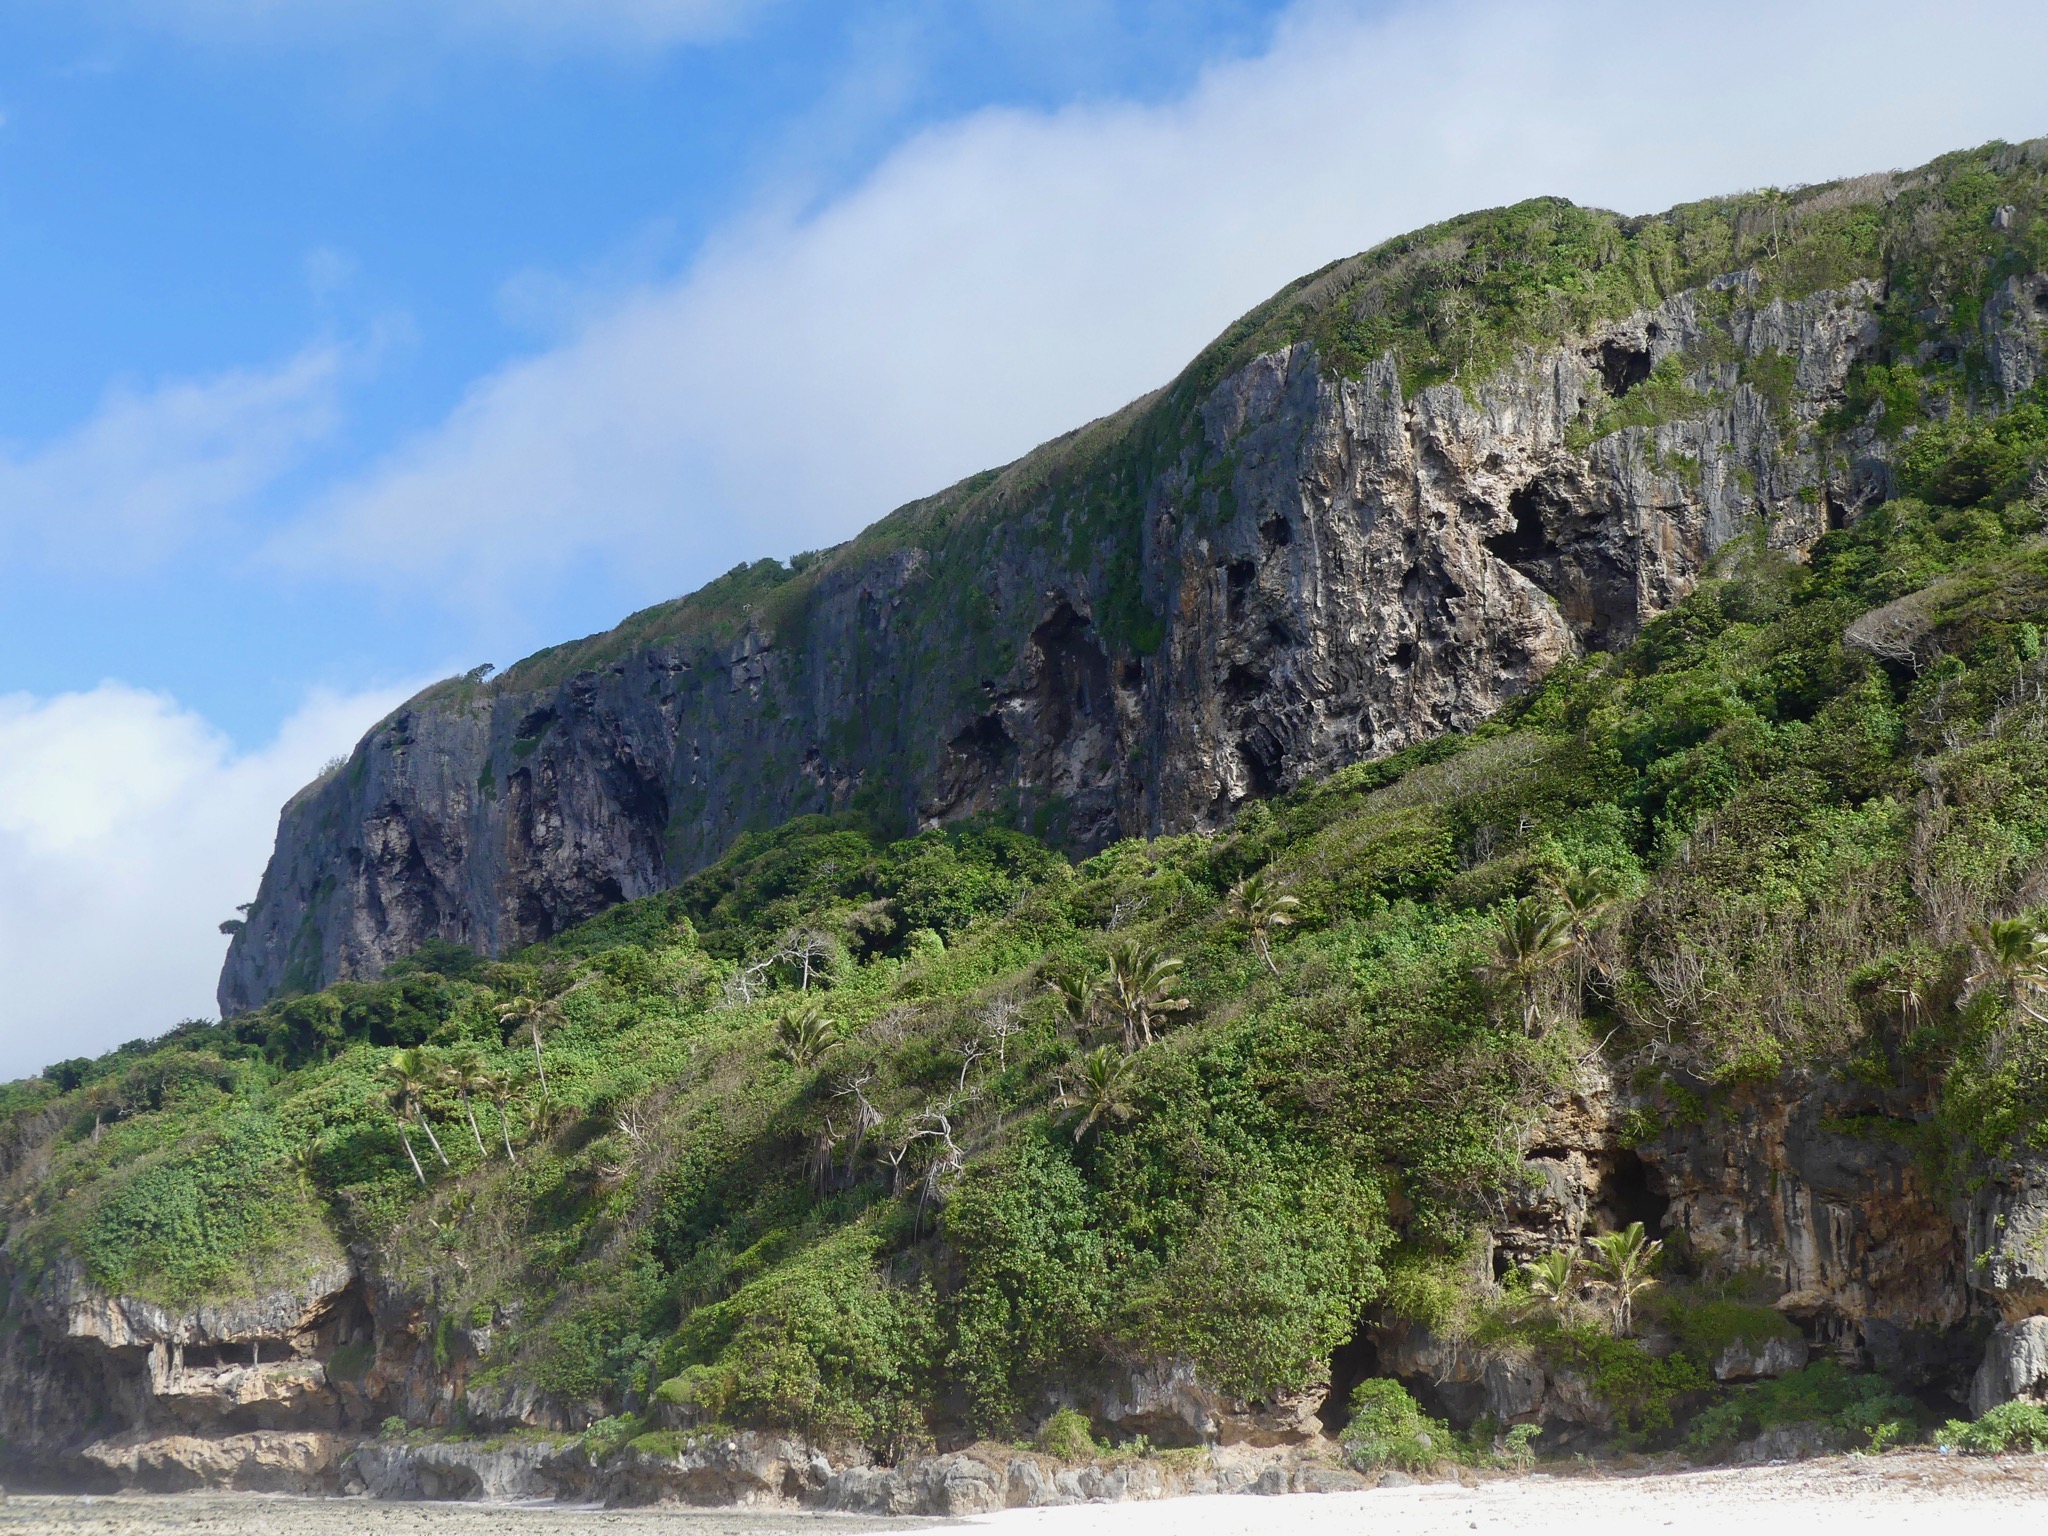 View of the Whale wall from Fangatave Beach, Eua island, Tonga.